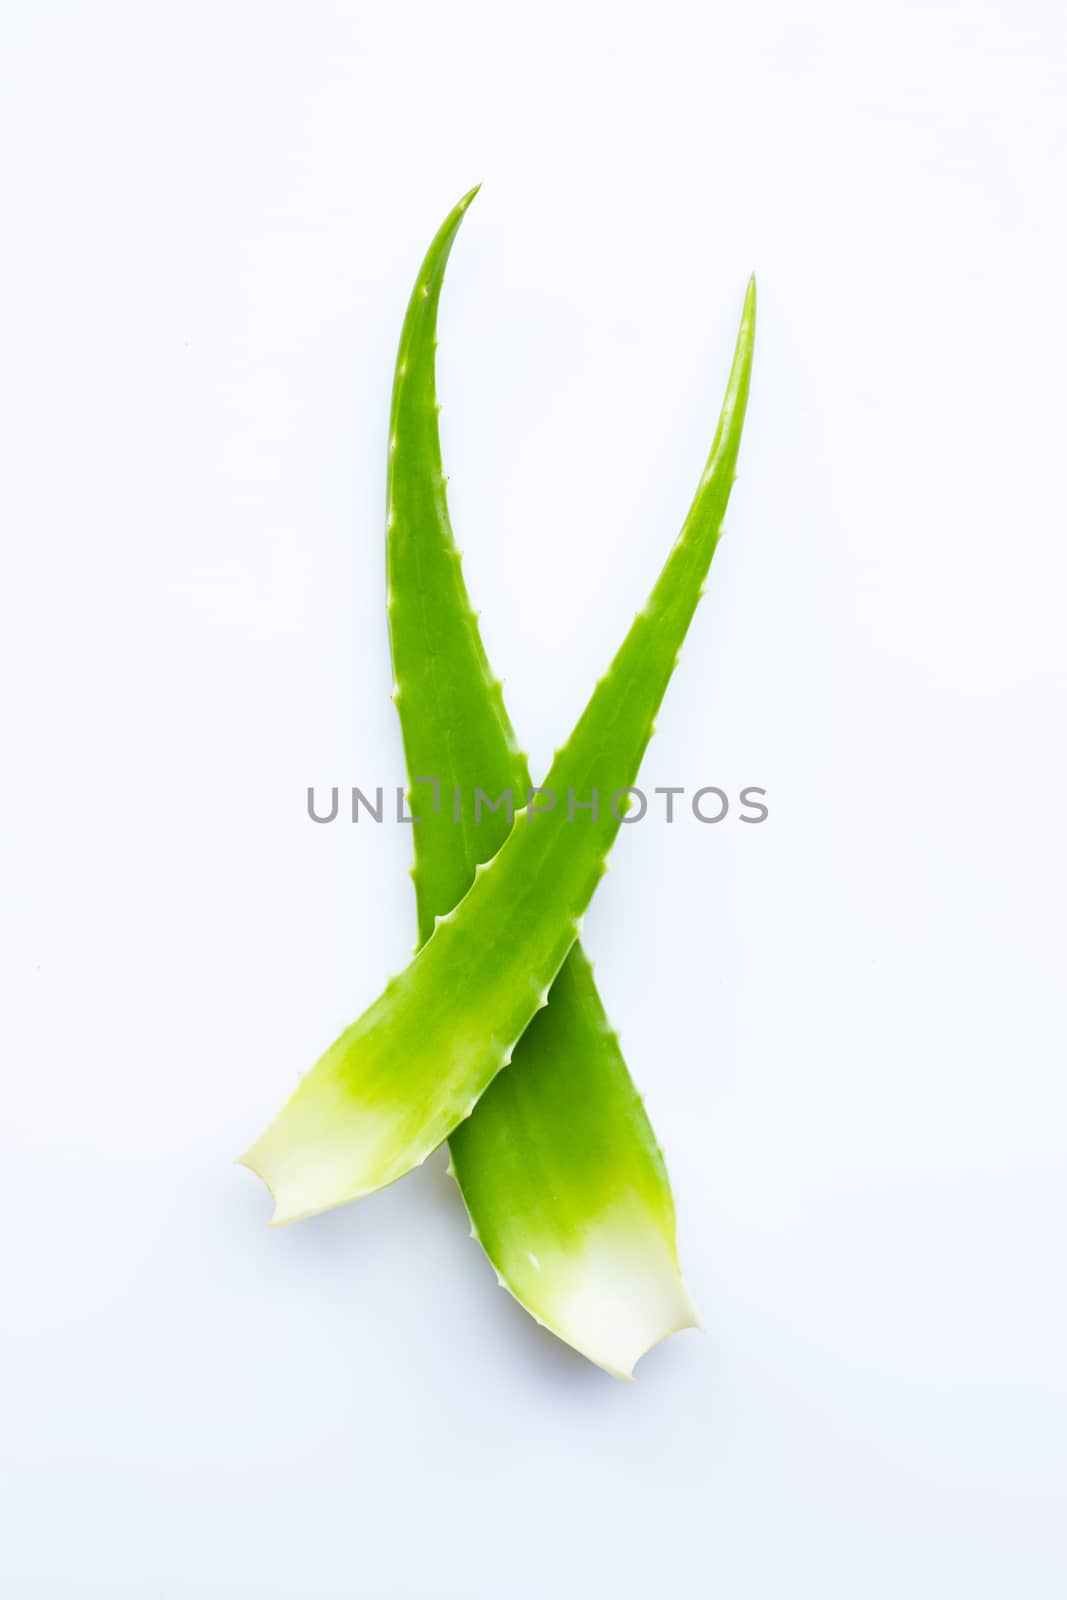 Aloe vera fresh leaves on white background.  Copy space